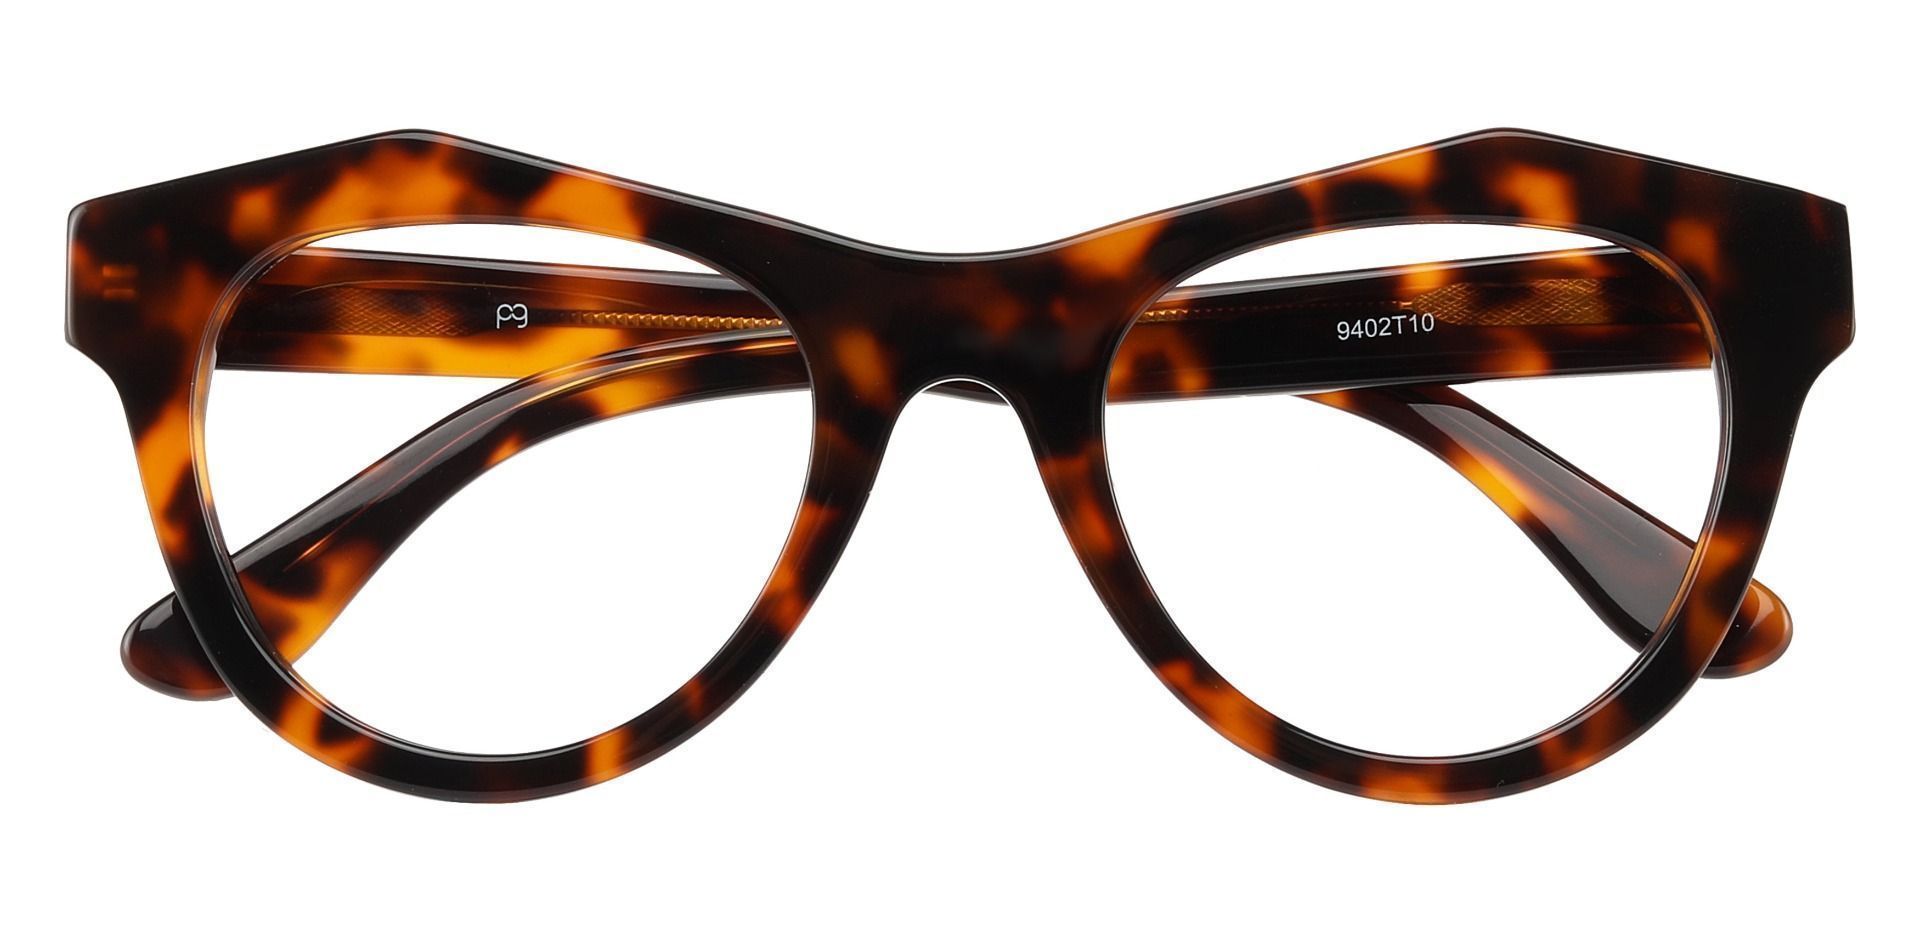 Jensen Geometric Prescription Glasses - Tortoise